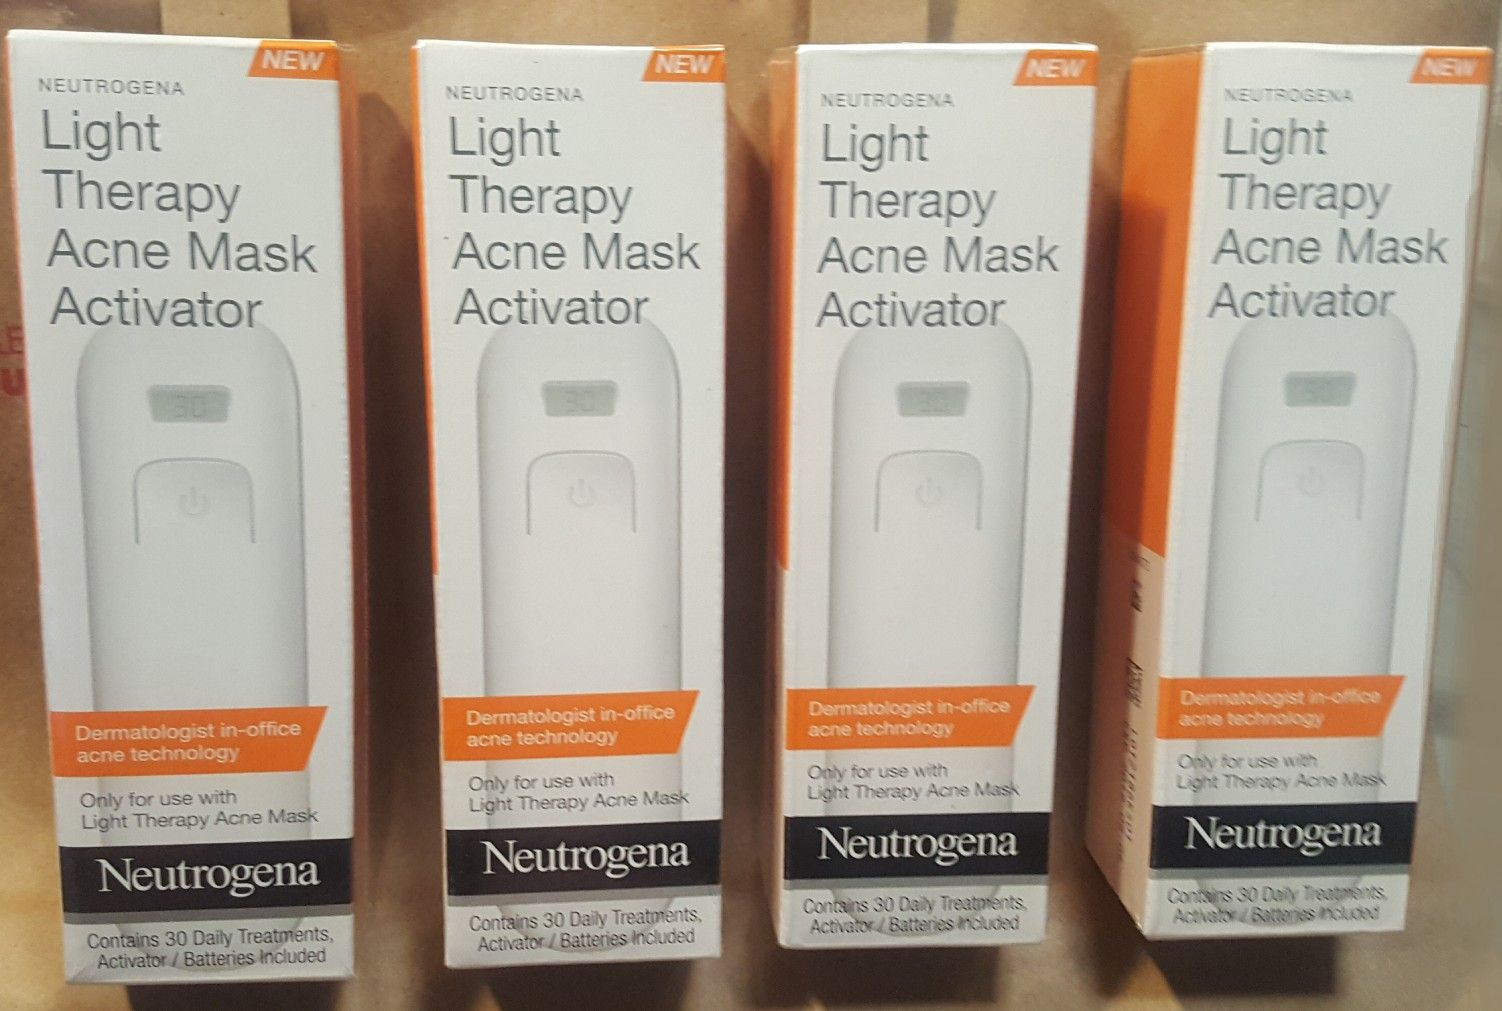 Neutrogena Light Therapy Acne Face Mask Activator